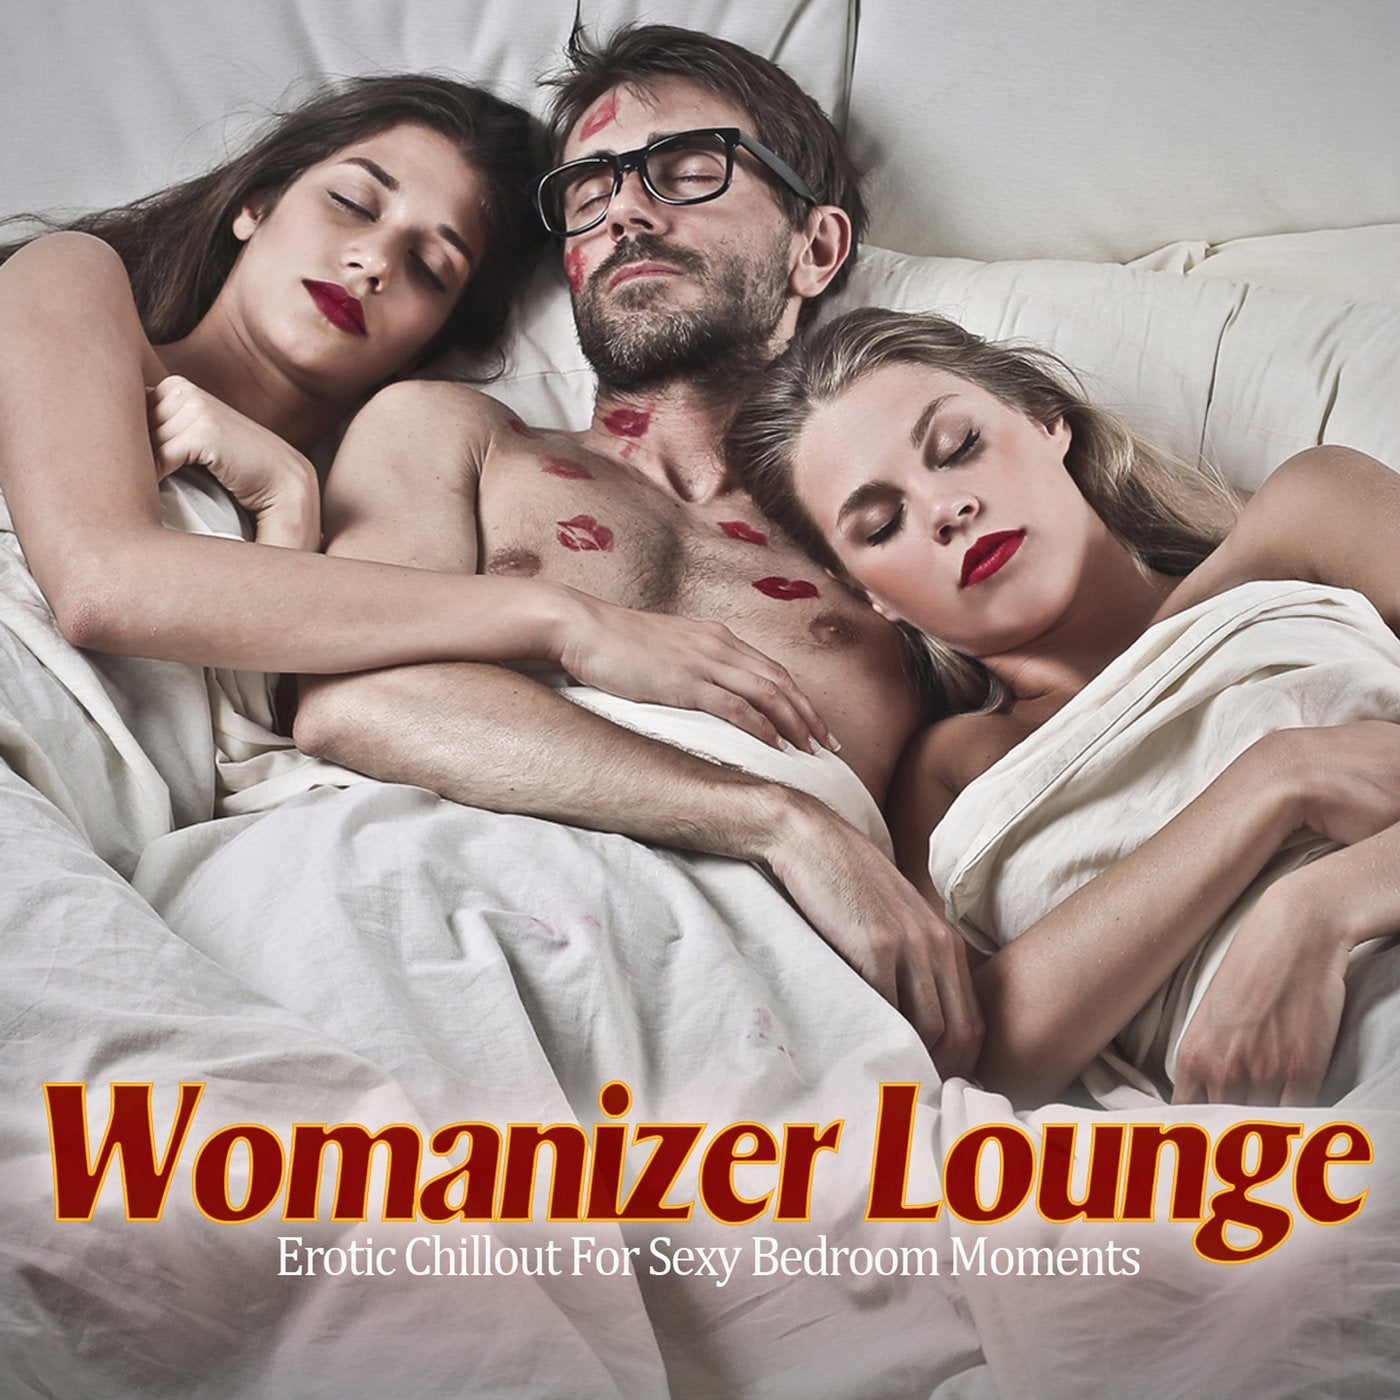 Erotic lounge comfort